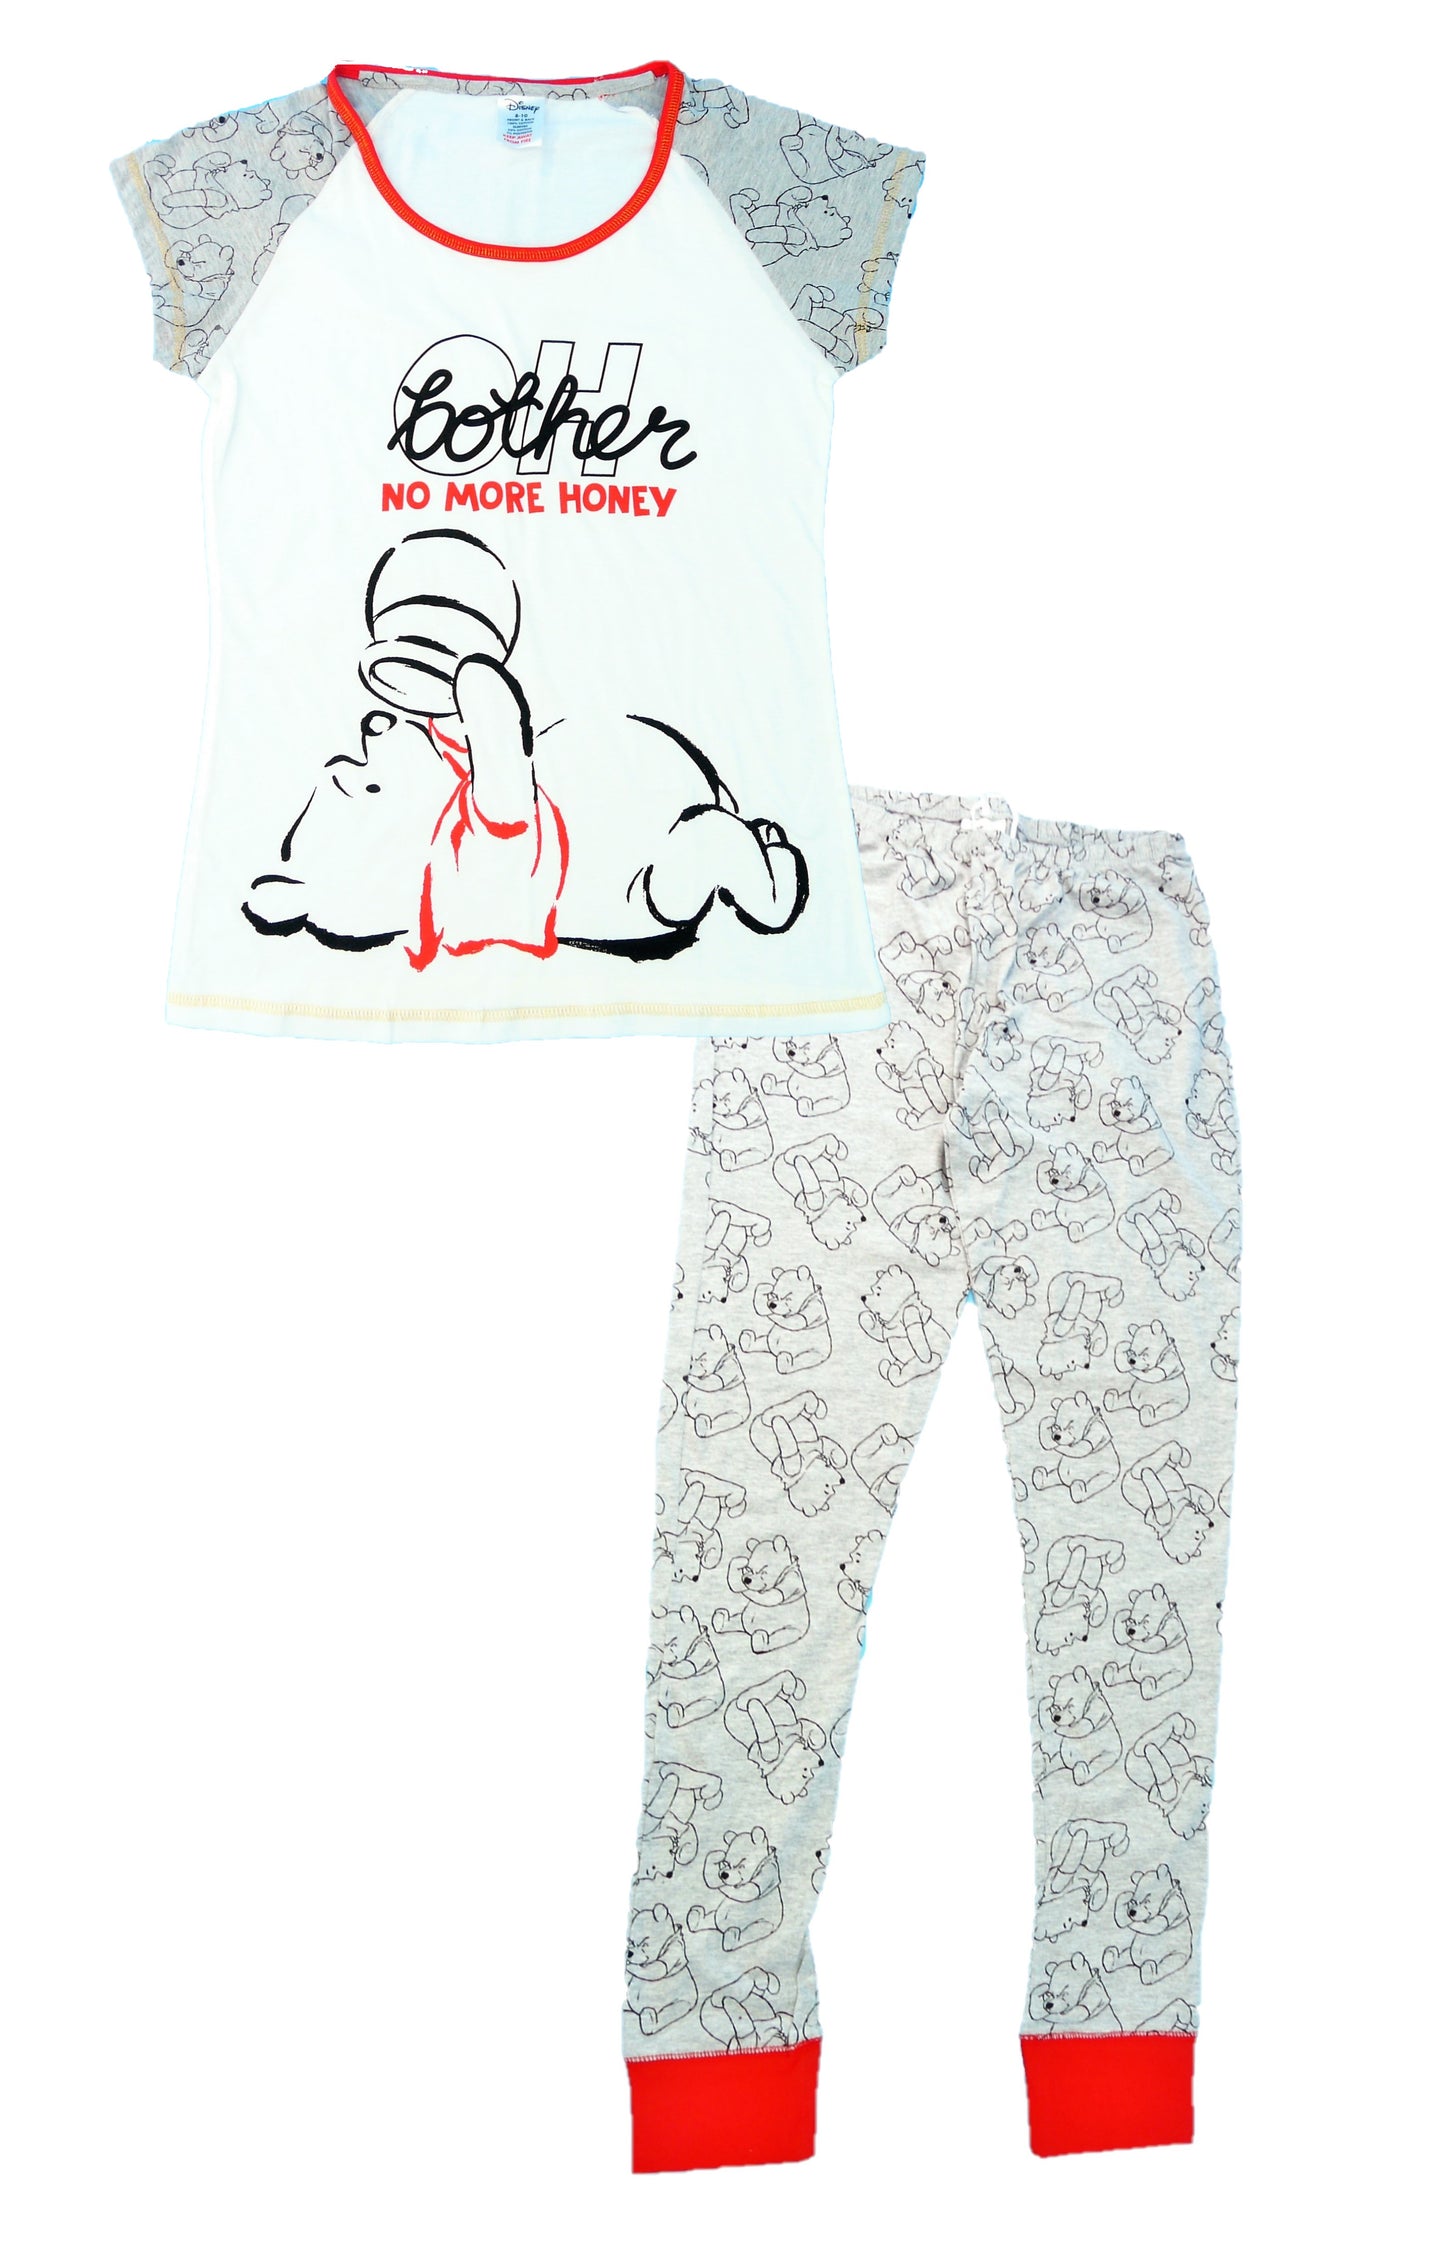 Disney Winnie the Pooh "Oh Bother" Ladies Pyjama Set - Great Gift Idea